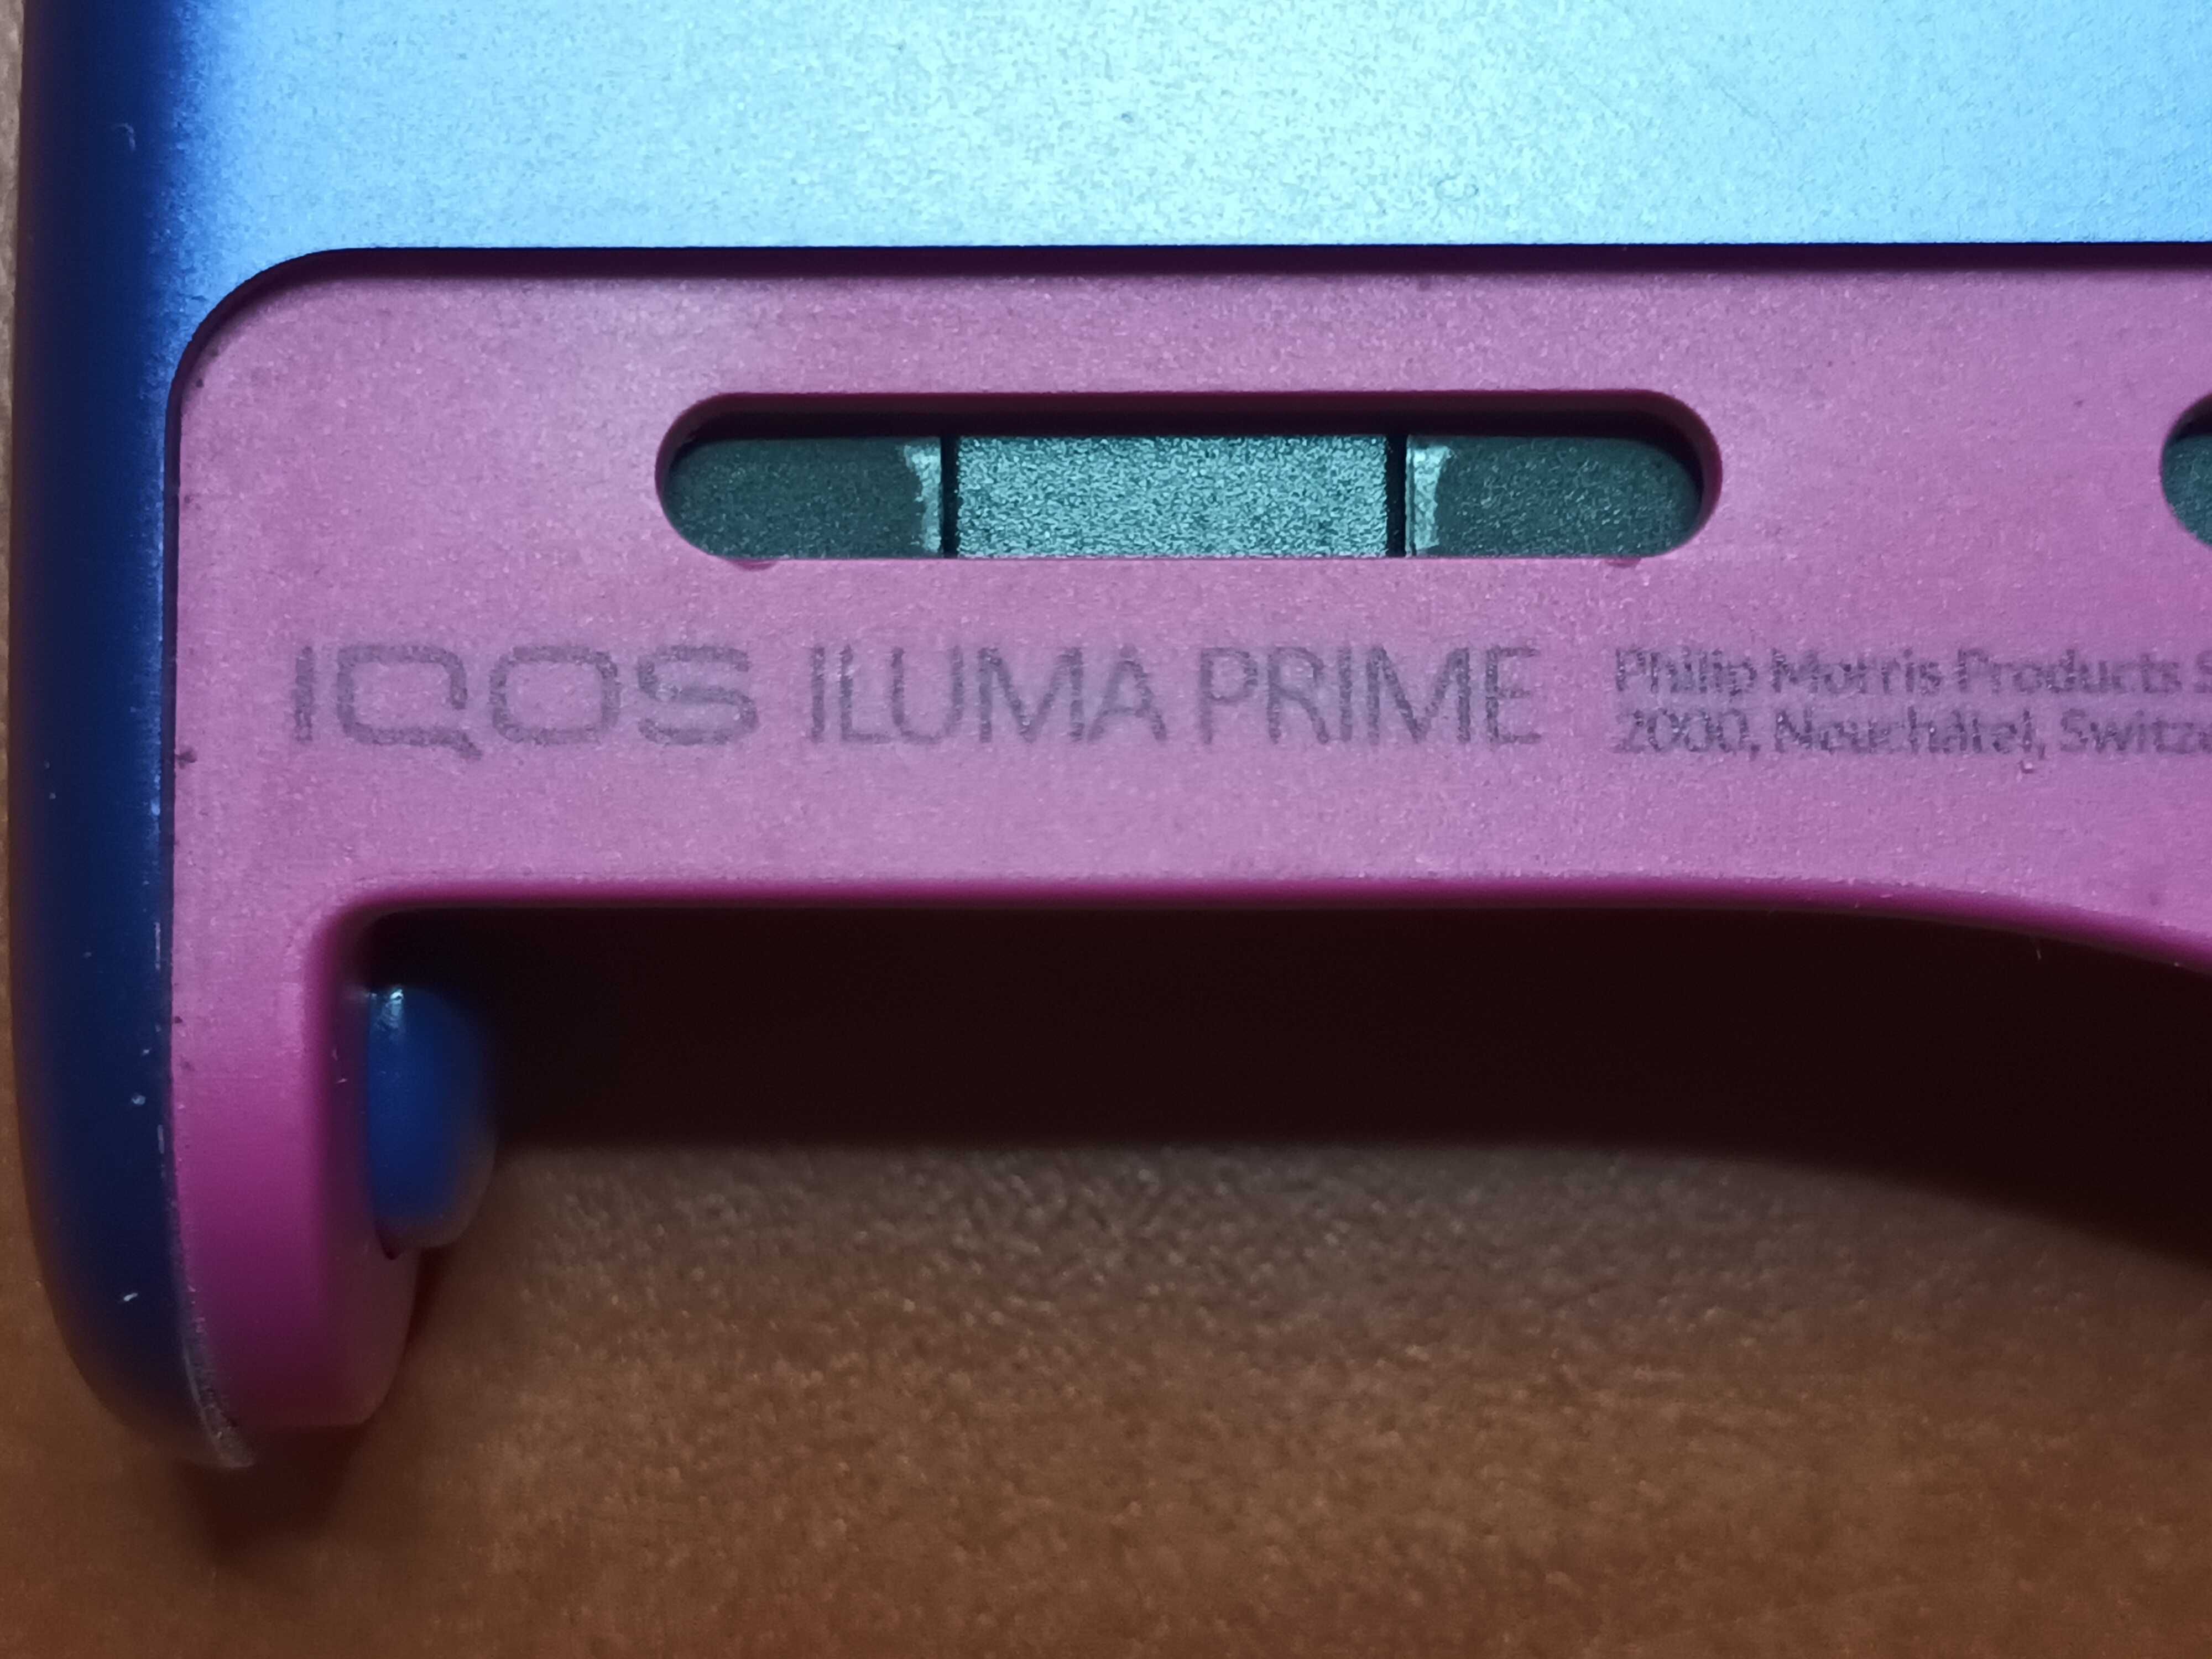 Tigara electronica KIT IQOS ILUMA PRIME NEON Limited Edition